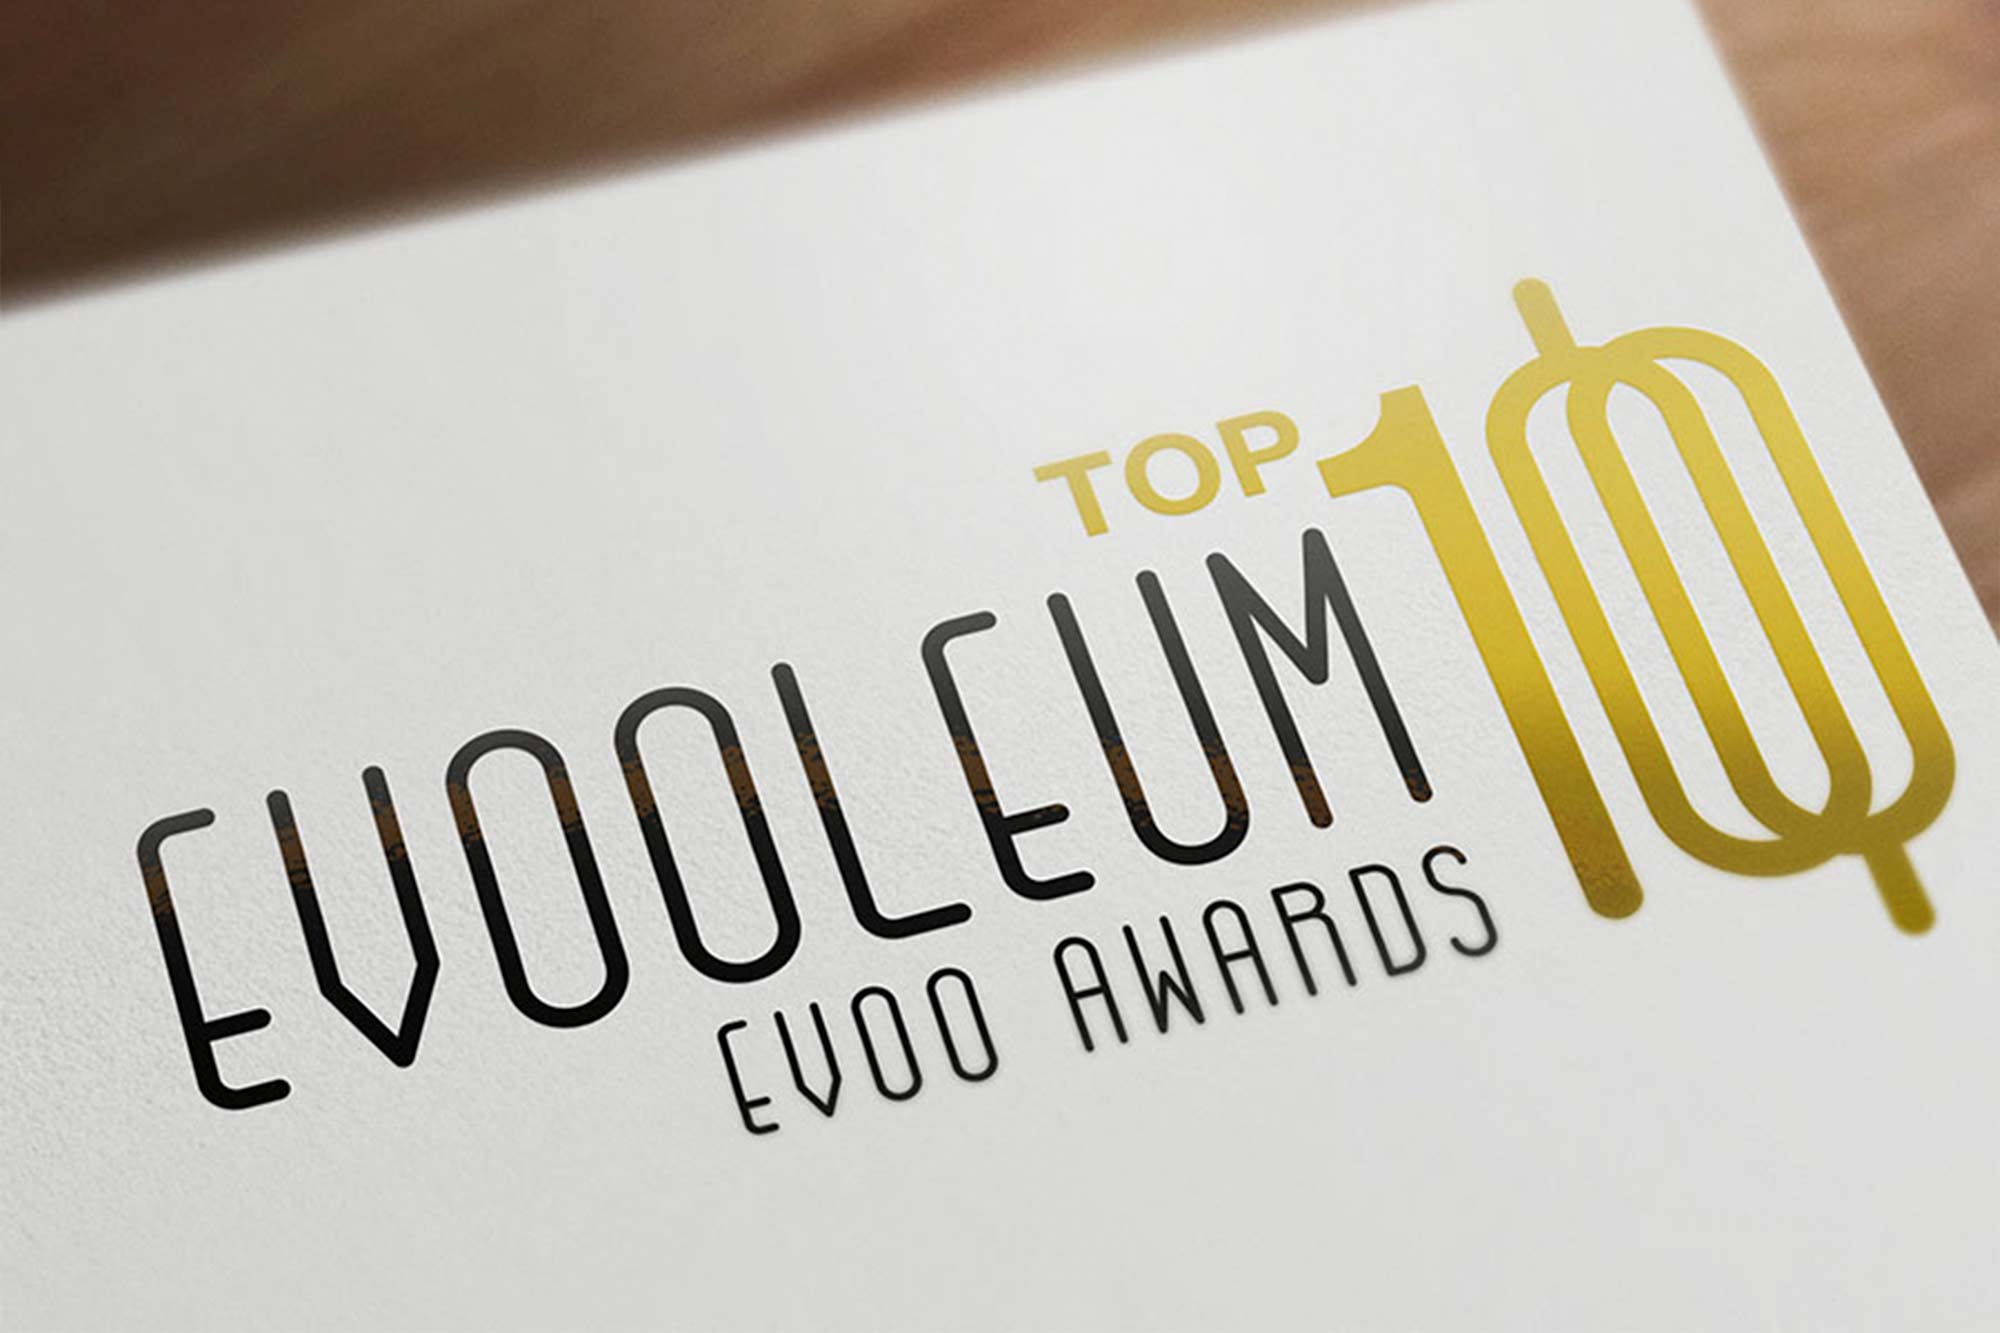 Mejores aceites del mundo según la prestigiosa Guía Evooleum - best olive oils in the world | Torrent Closures